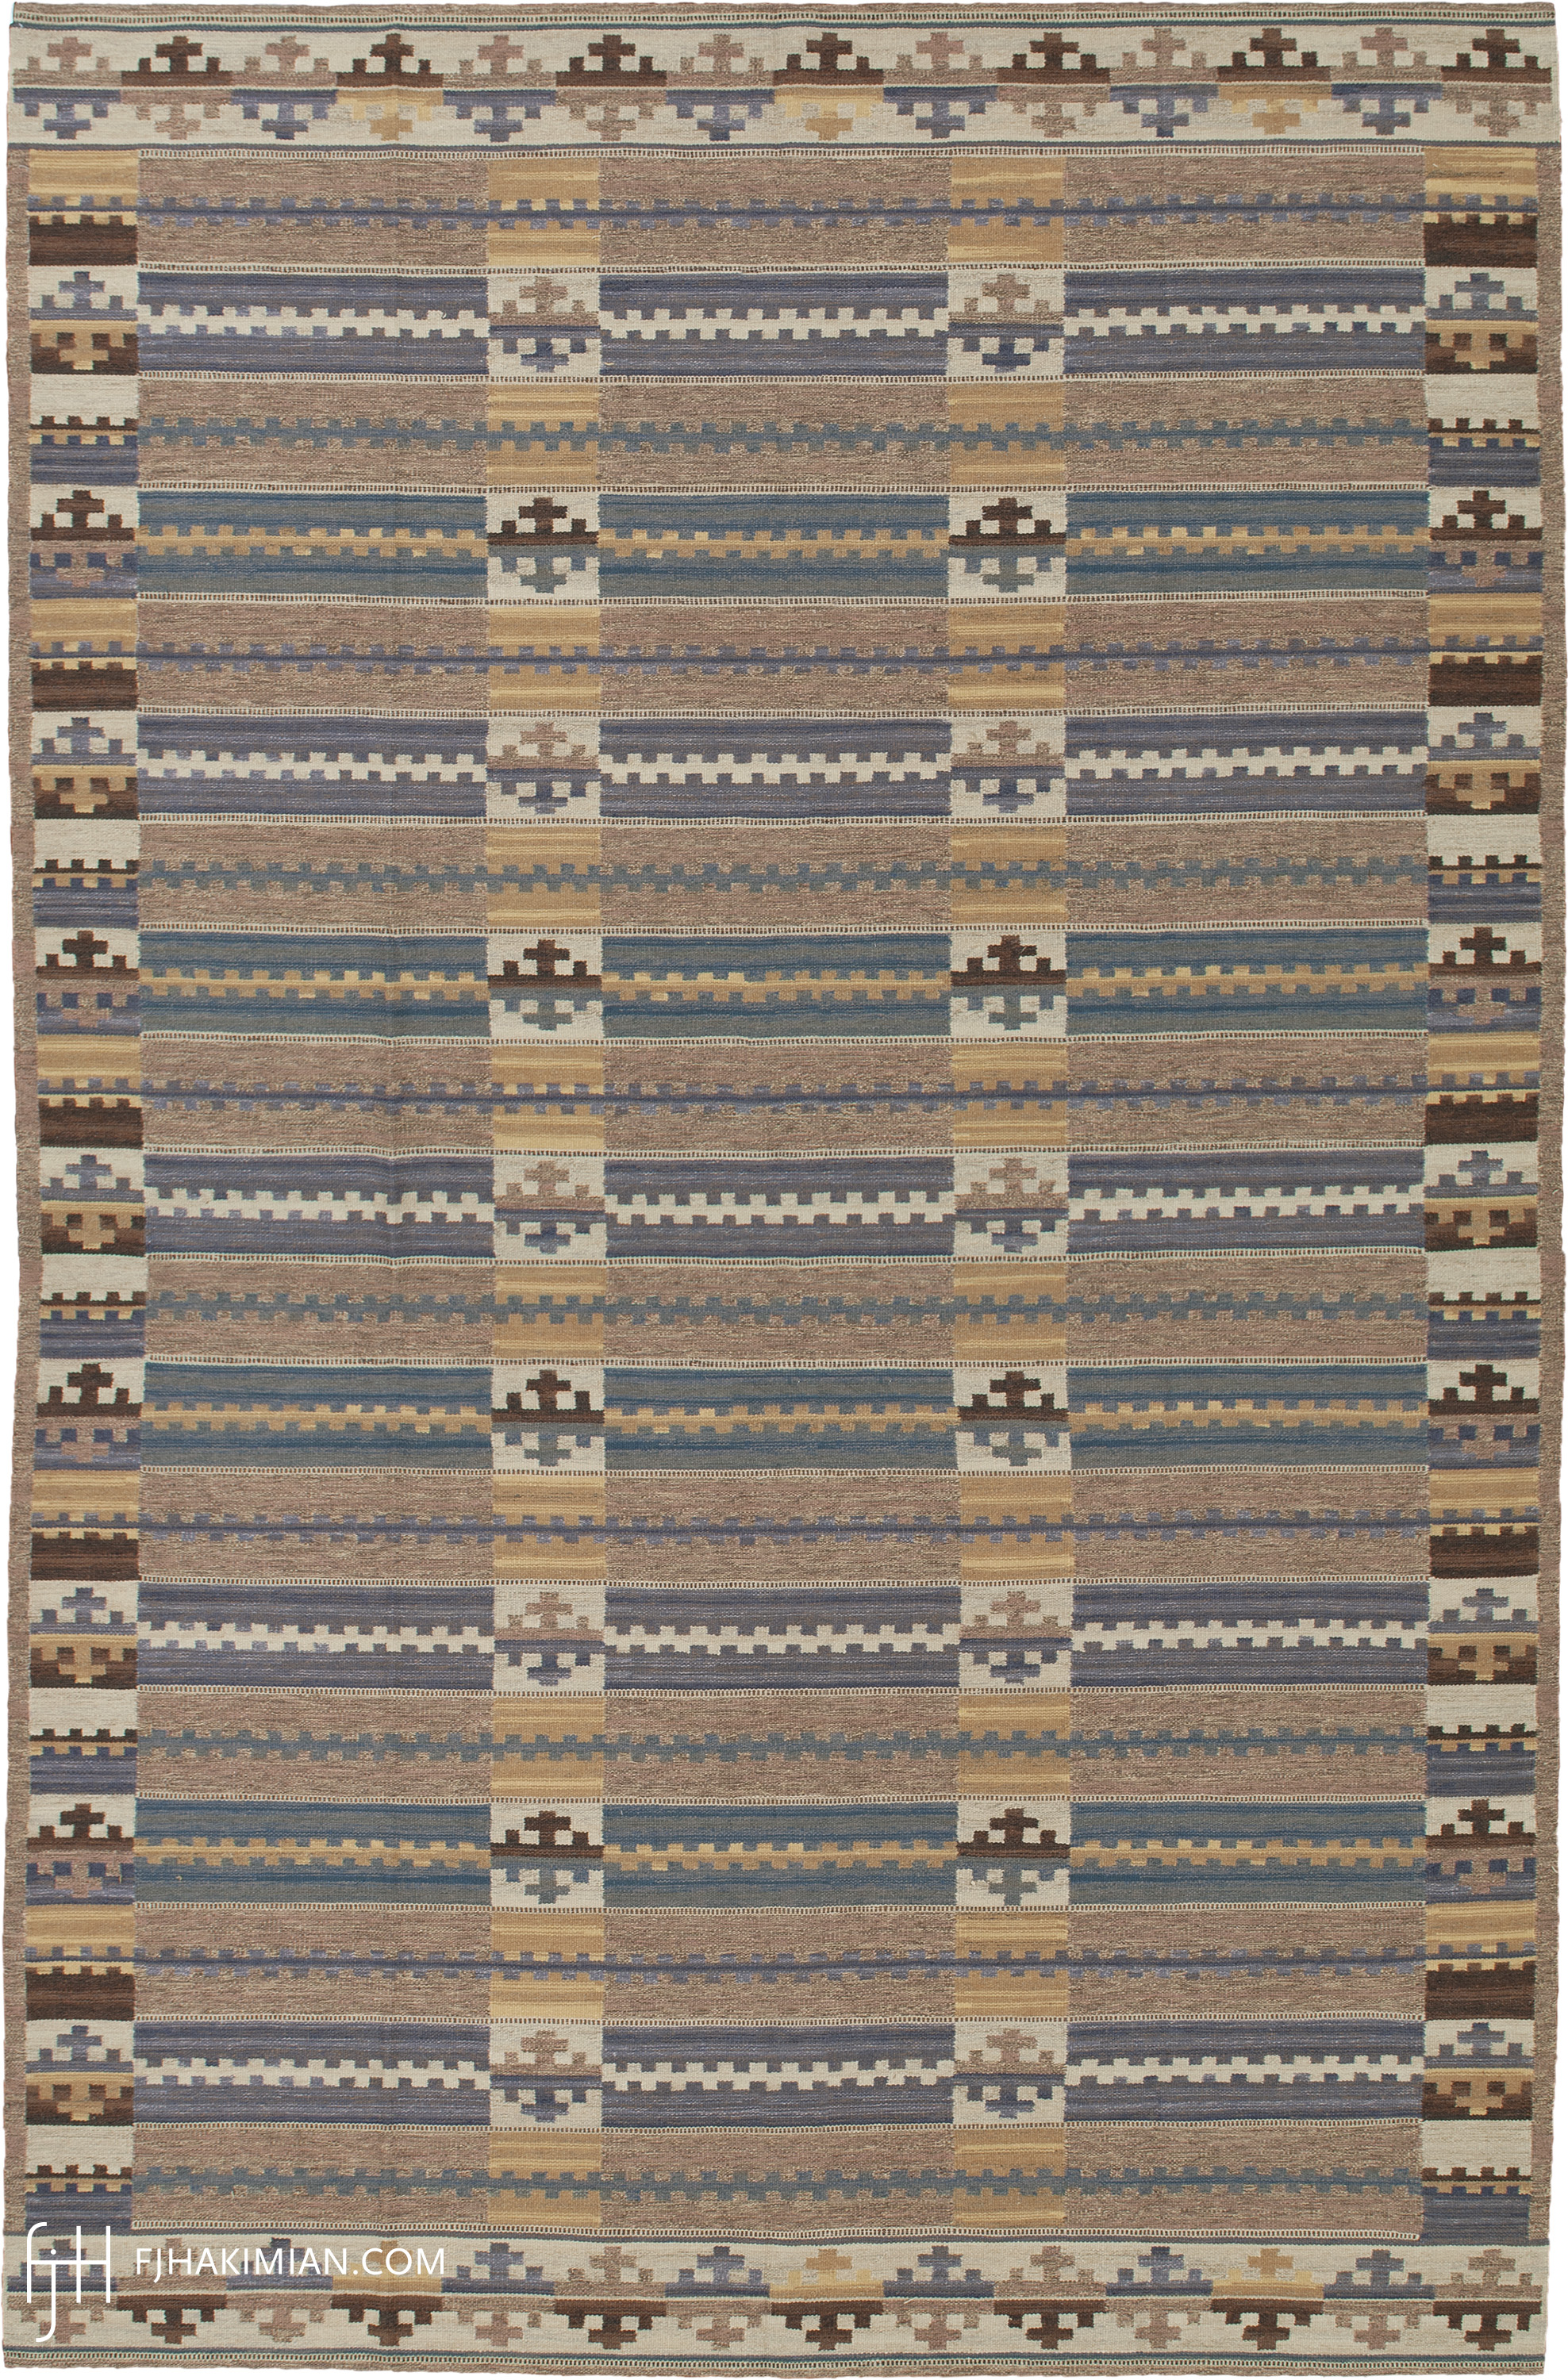 Flaga Design | Custom Swedish Flat Weave Carpet | FJ Hakimian | Carpet Gallery in NY